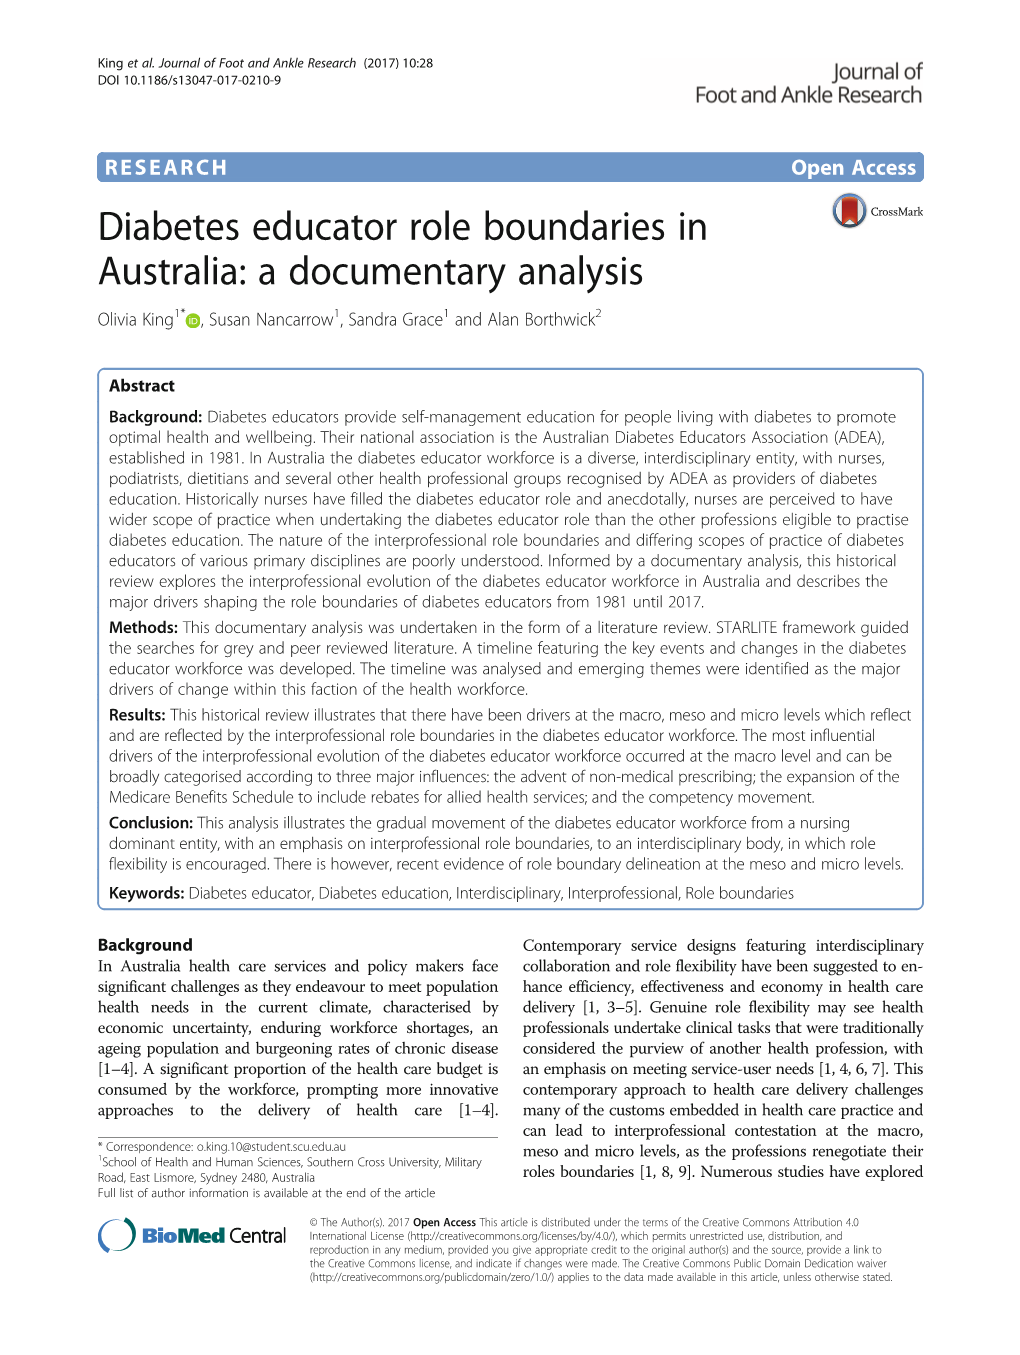 Diabetes Educator Role Boundaries in Australia: a Documentary Analysis Olivia King1* , Susan Nancarrow1, Sandra Grace1 and Alan Borthwick2